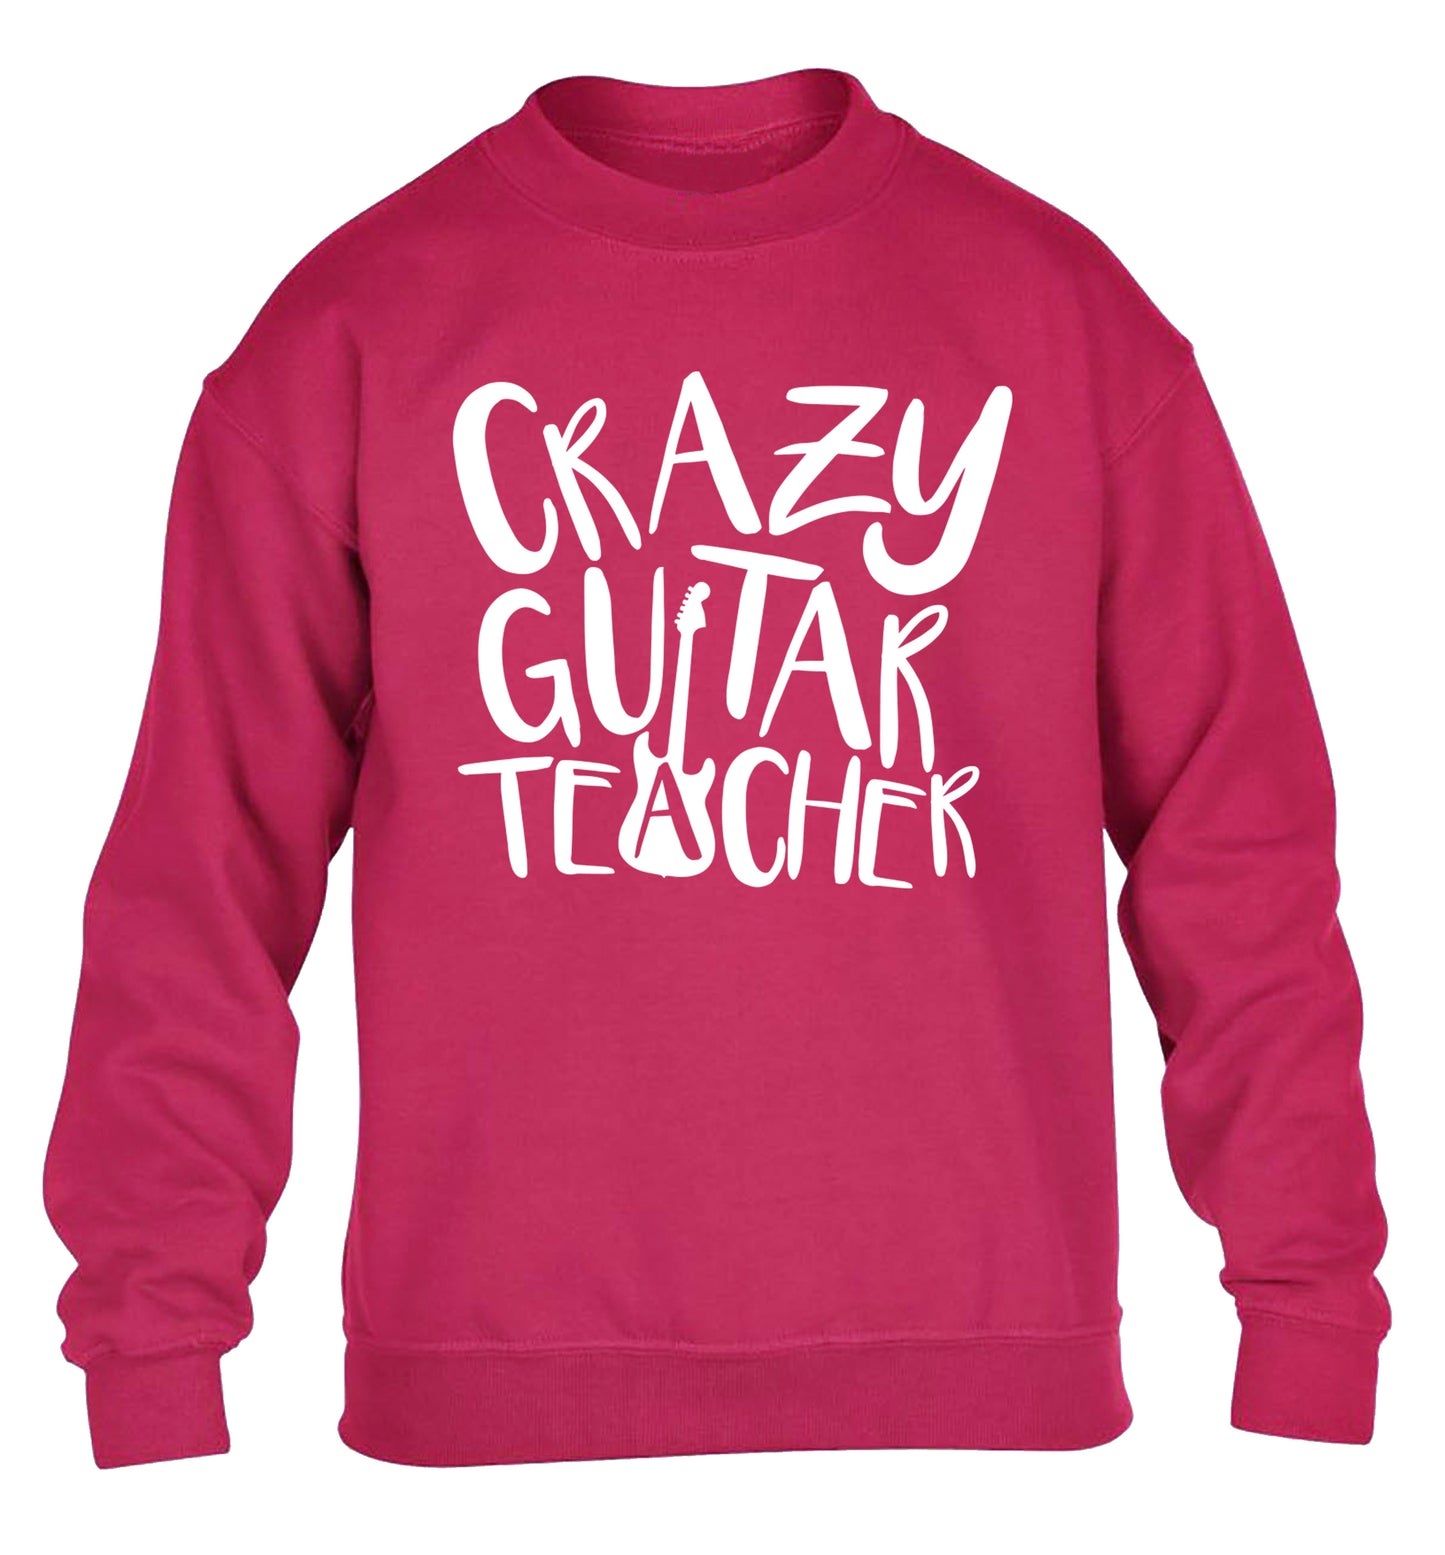 Crazy guitar teacher children's pink sweater 12-13 Years